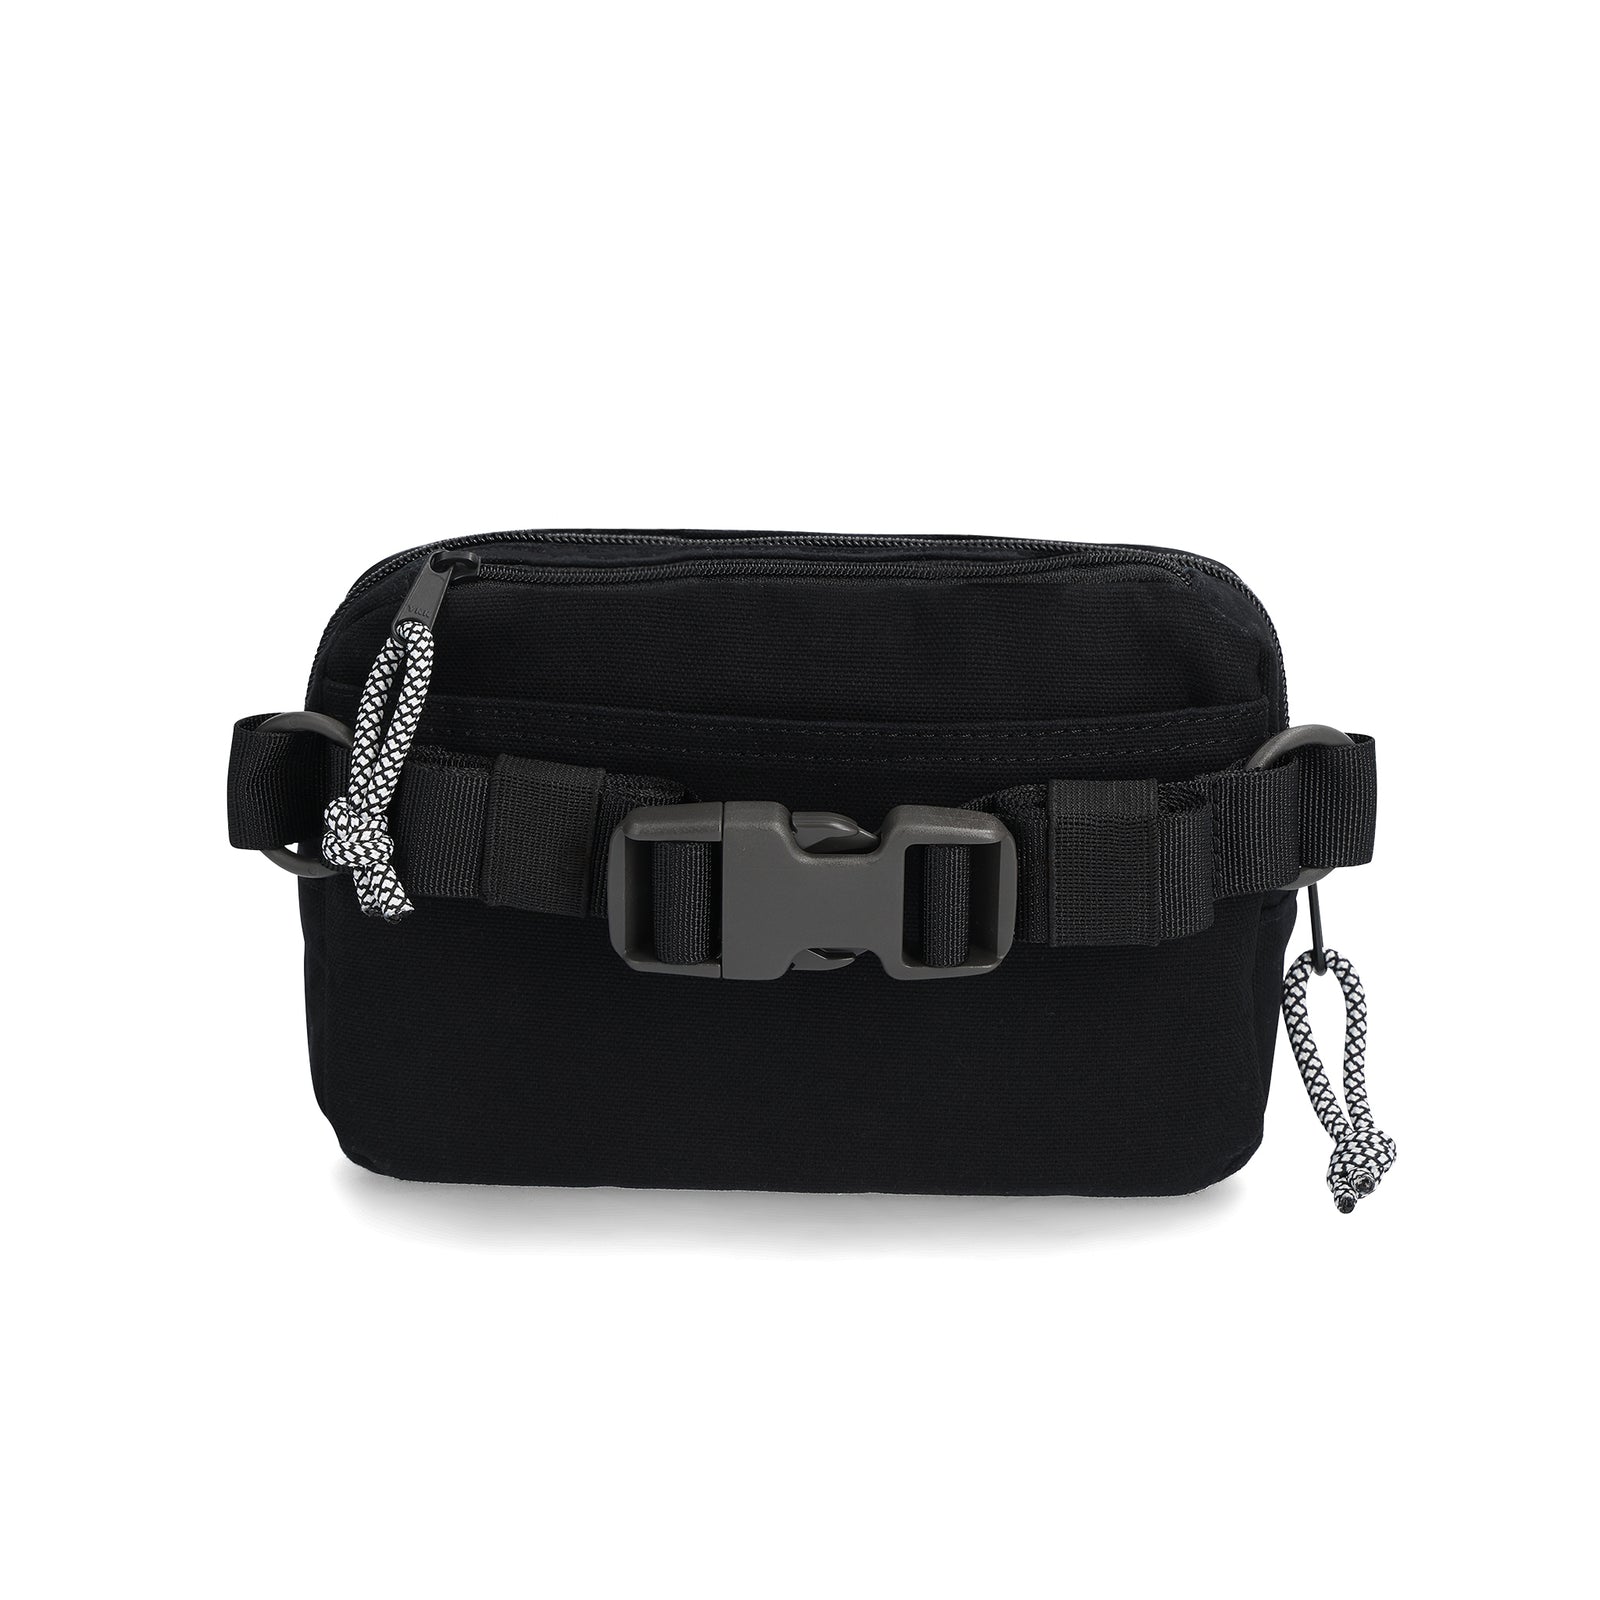 Back View of Topo Designs Dirt Belt Bag in "Black"